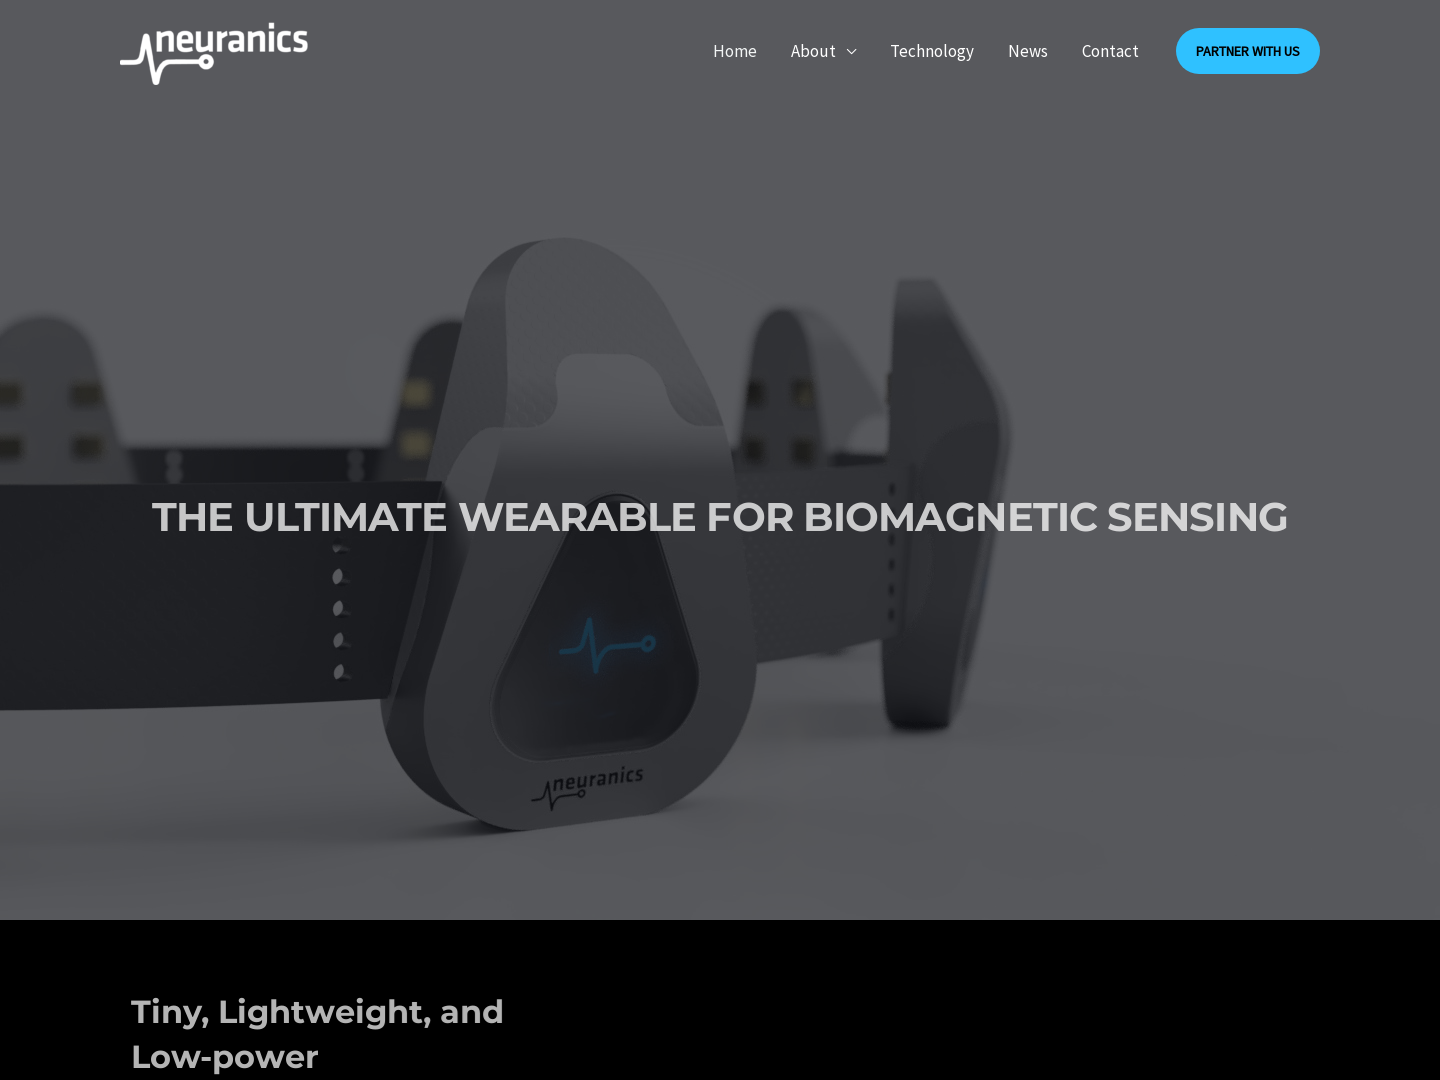 "Neuranics raises £1.9M funding for magnetic sensor advancements"